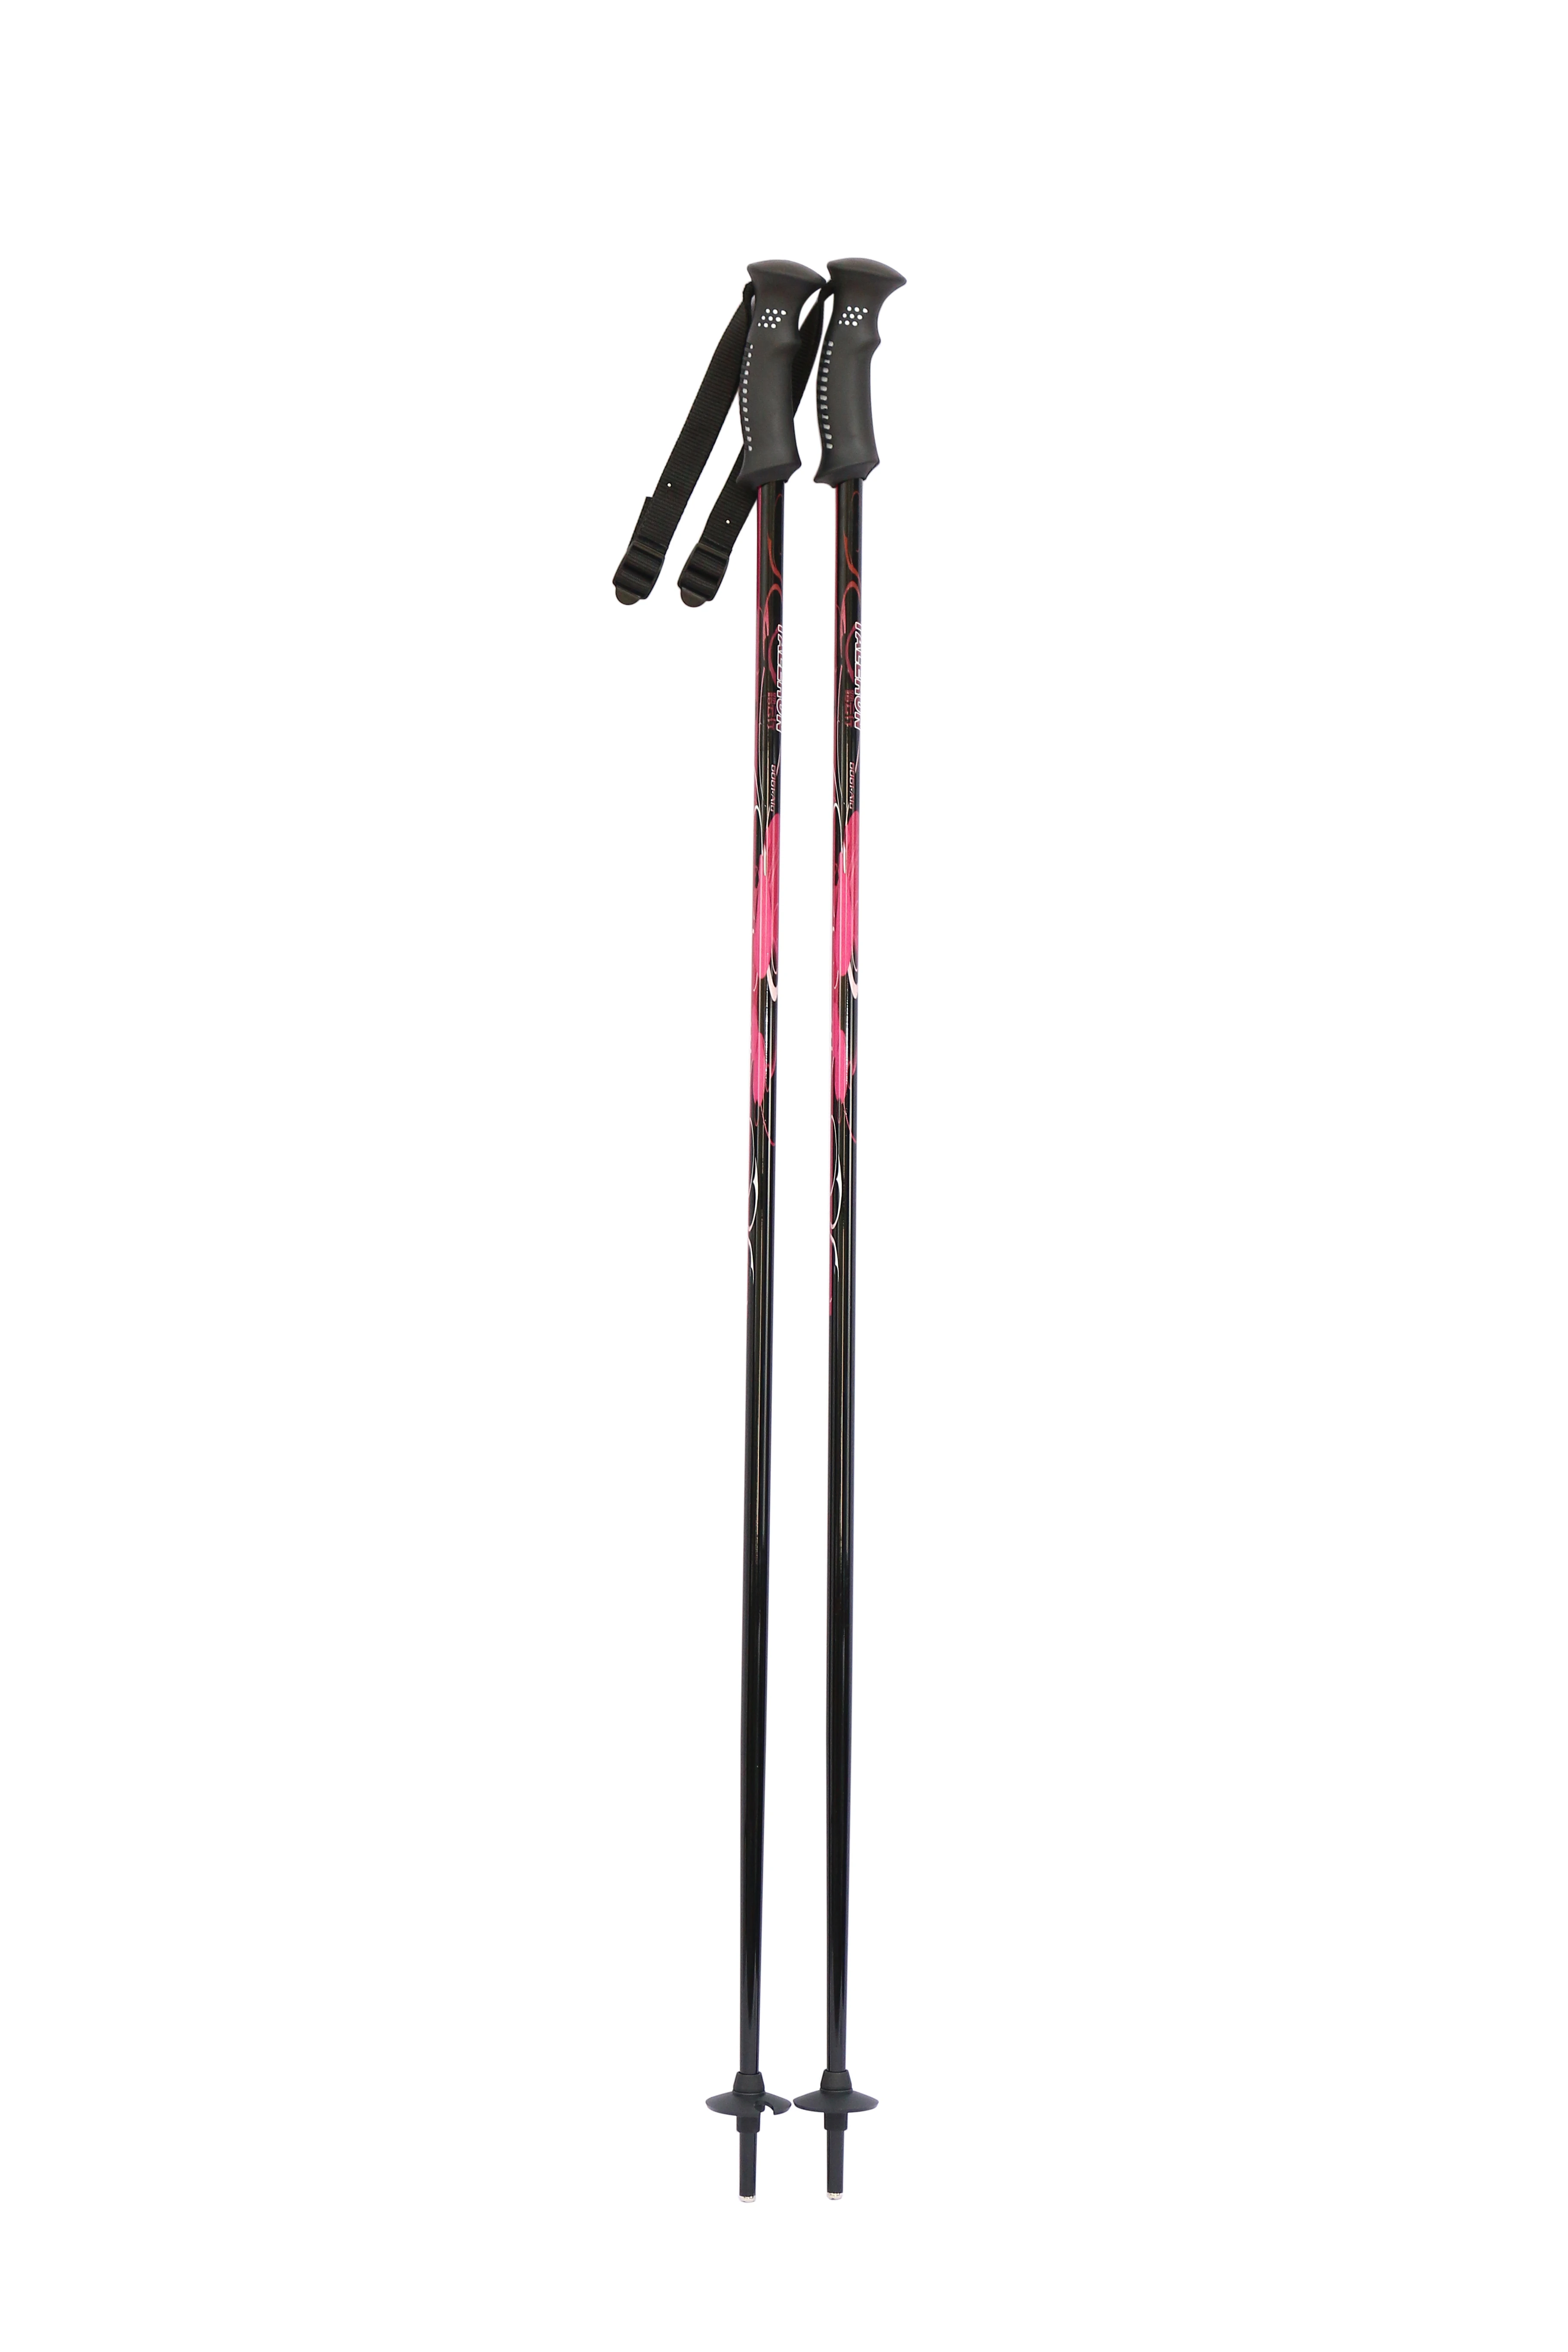 
YM116-C1 Portable High Quality New Design Ski Poles 